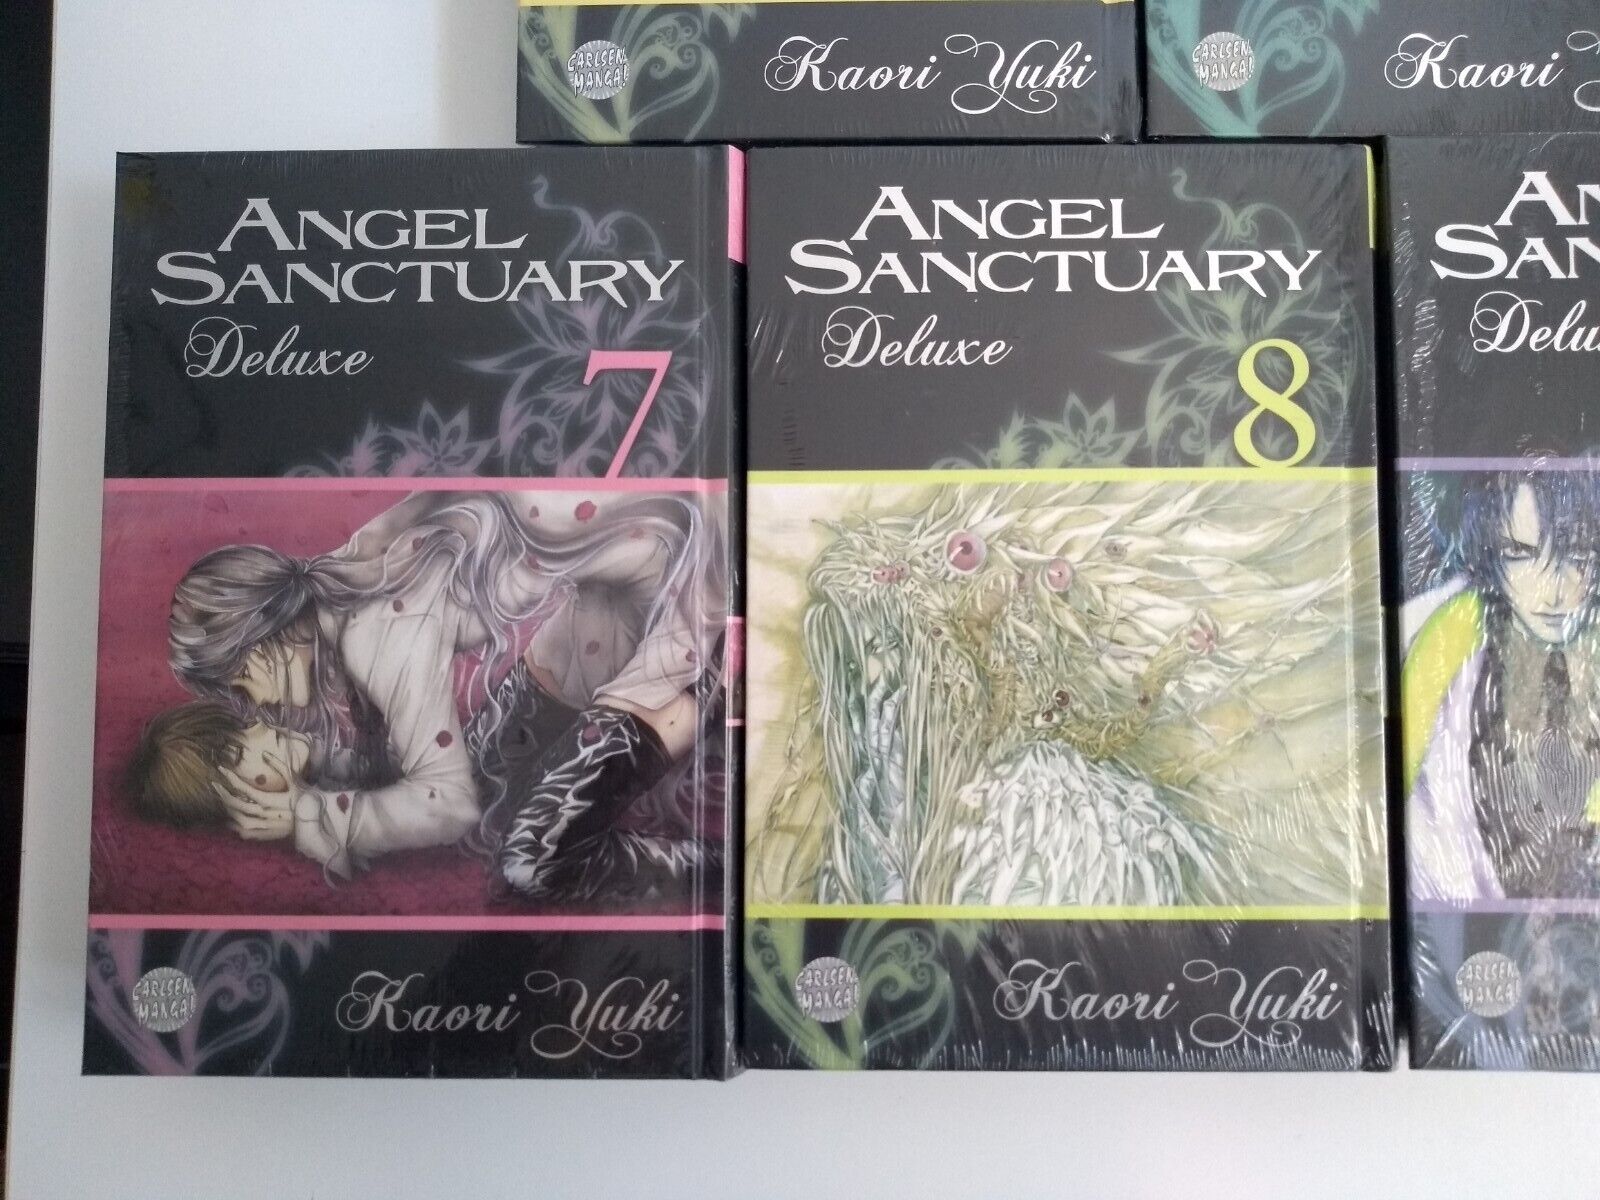 Angel Sanctuary Deluxe Manga 1-10 - Kaori Yuki - komplett neu